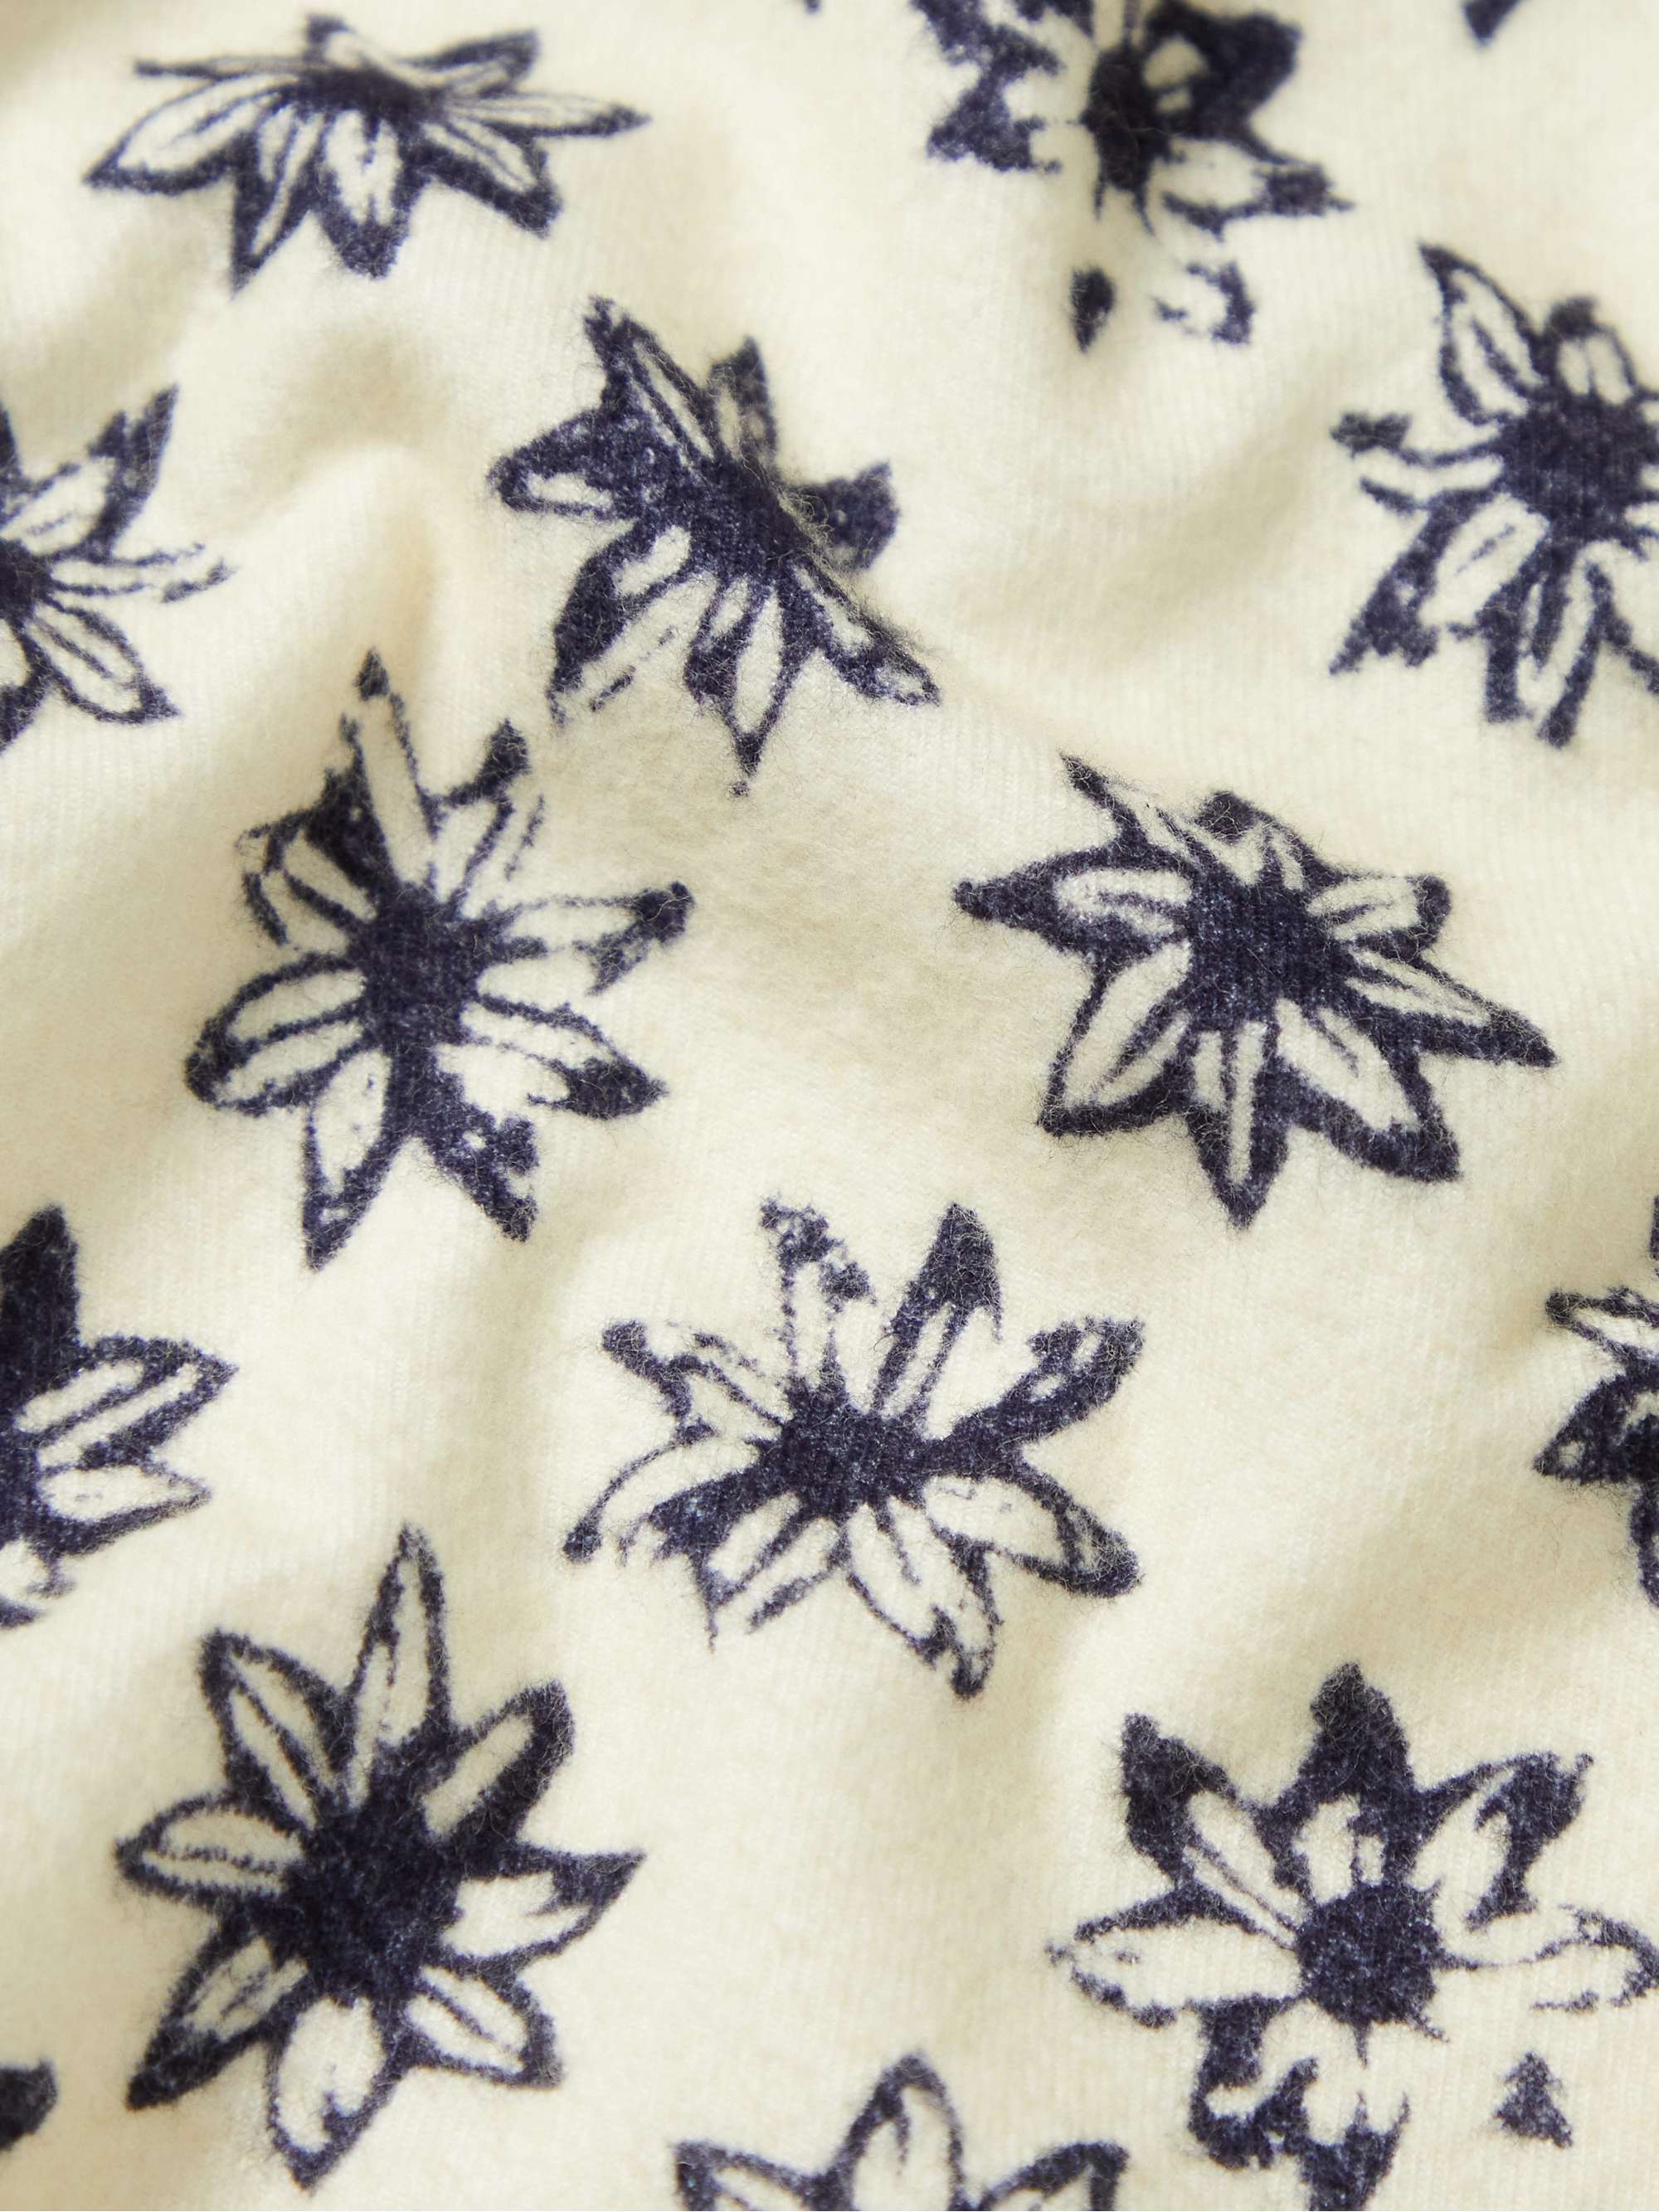 PORTUGUESE FLANNEL Printed Cotton-Flannel Shirt